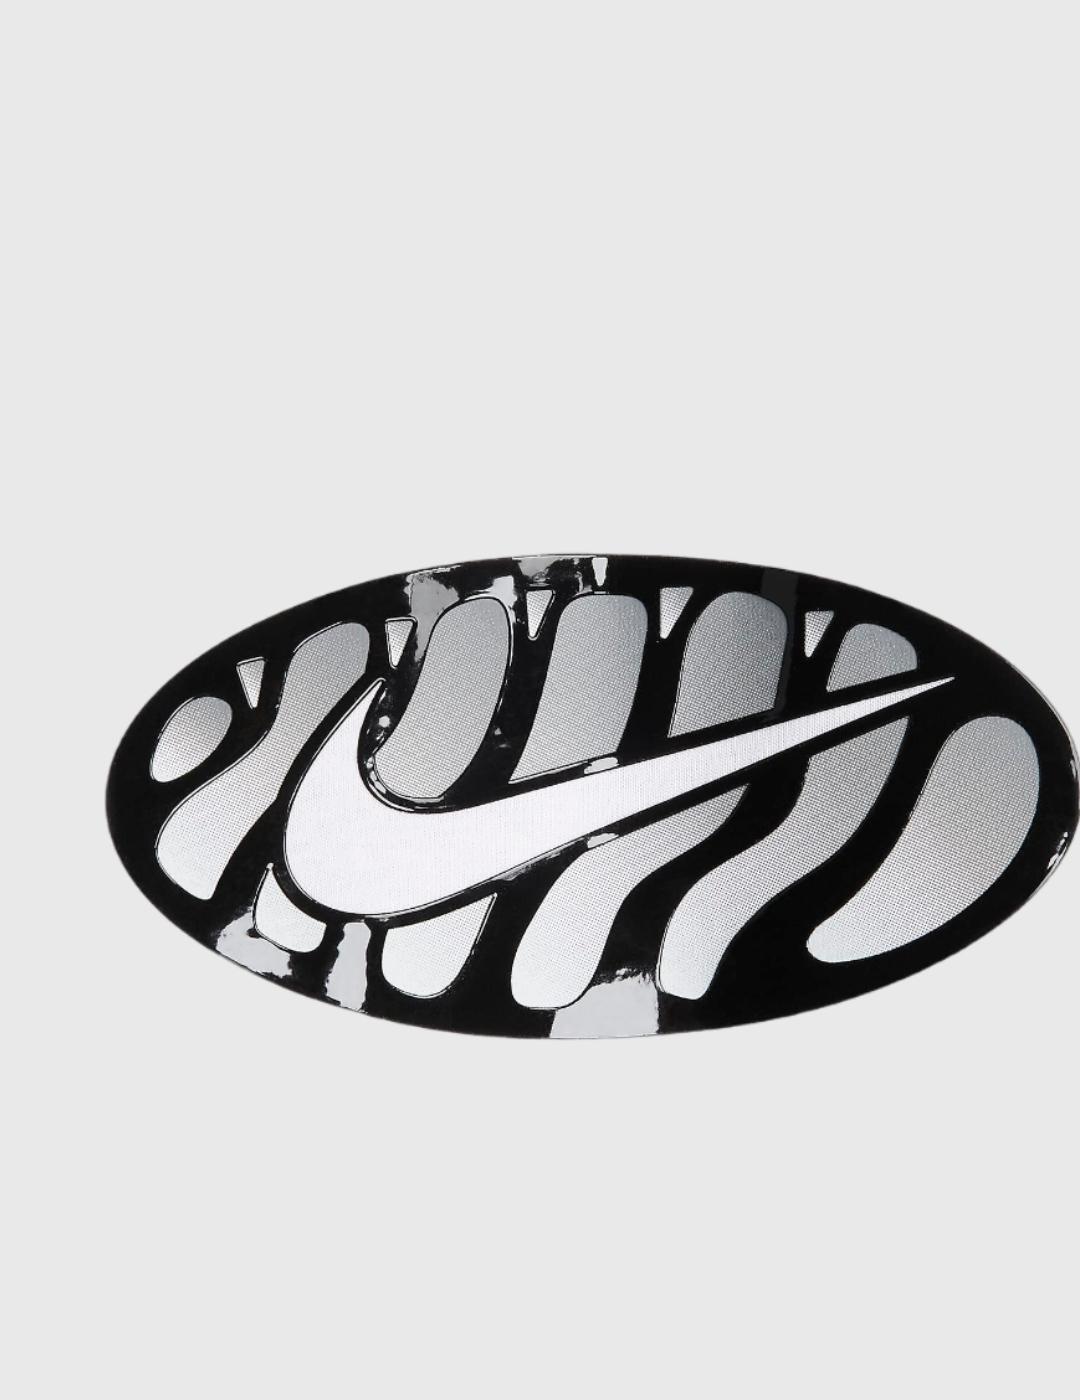 Camiseta Nike Air Max Day logo TN blanca